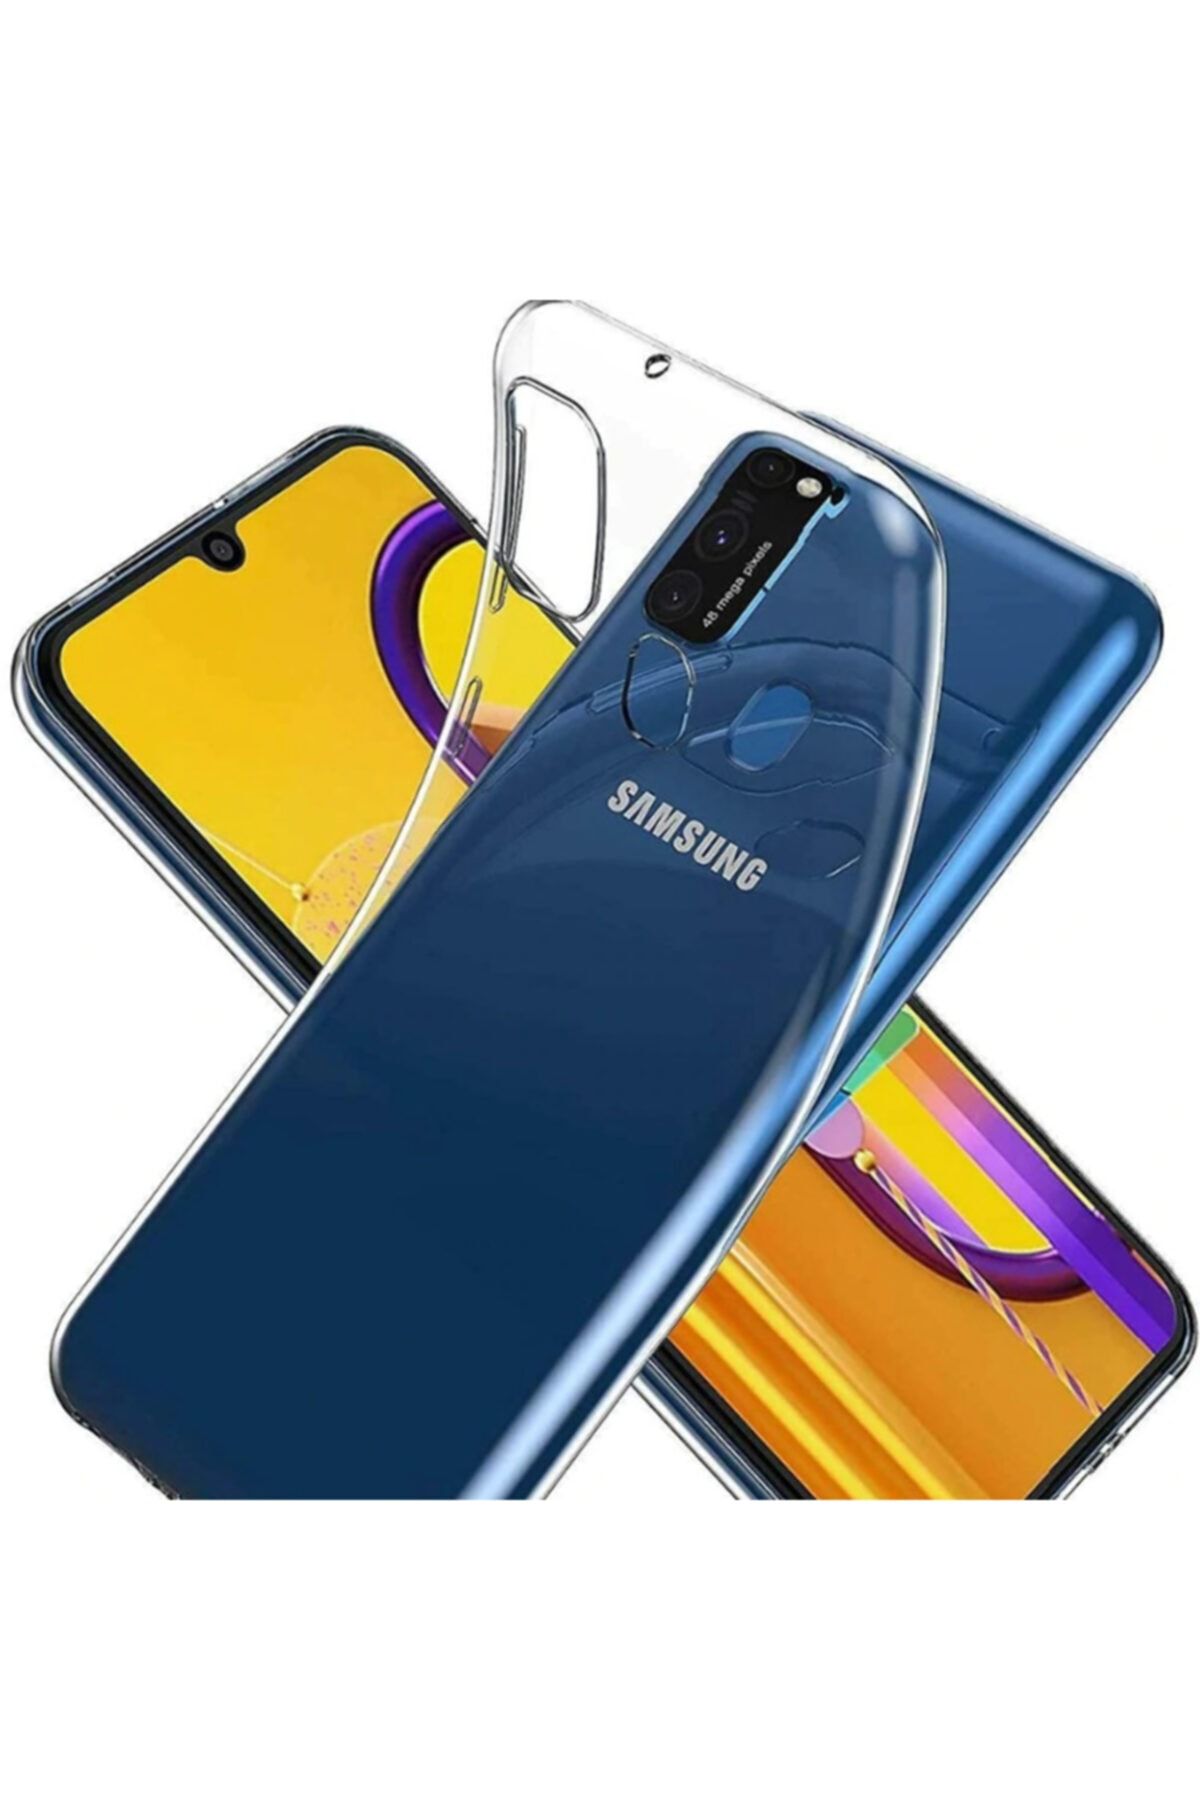 Fibaks Samsung Galaxy M21 Uyumlu Kılıf Şeffaf Yumuşak Silikon Kapak